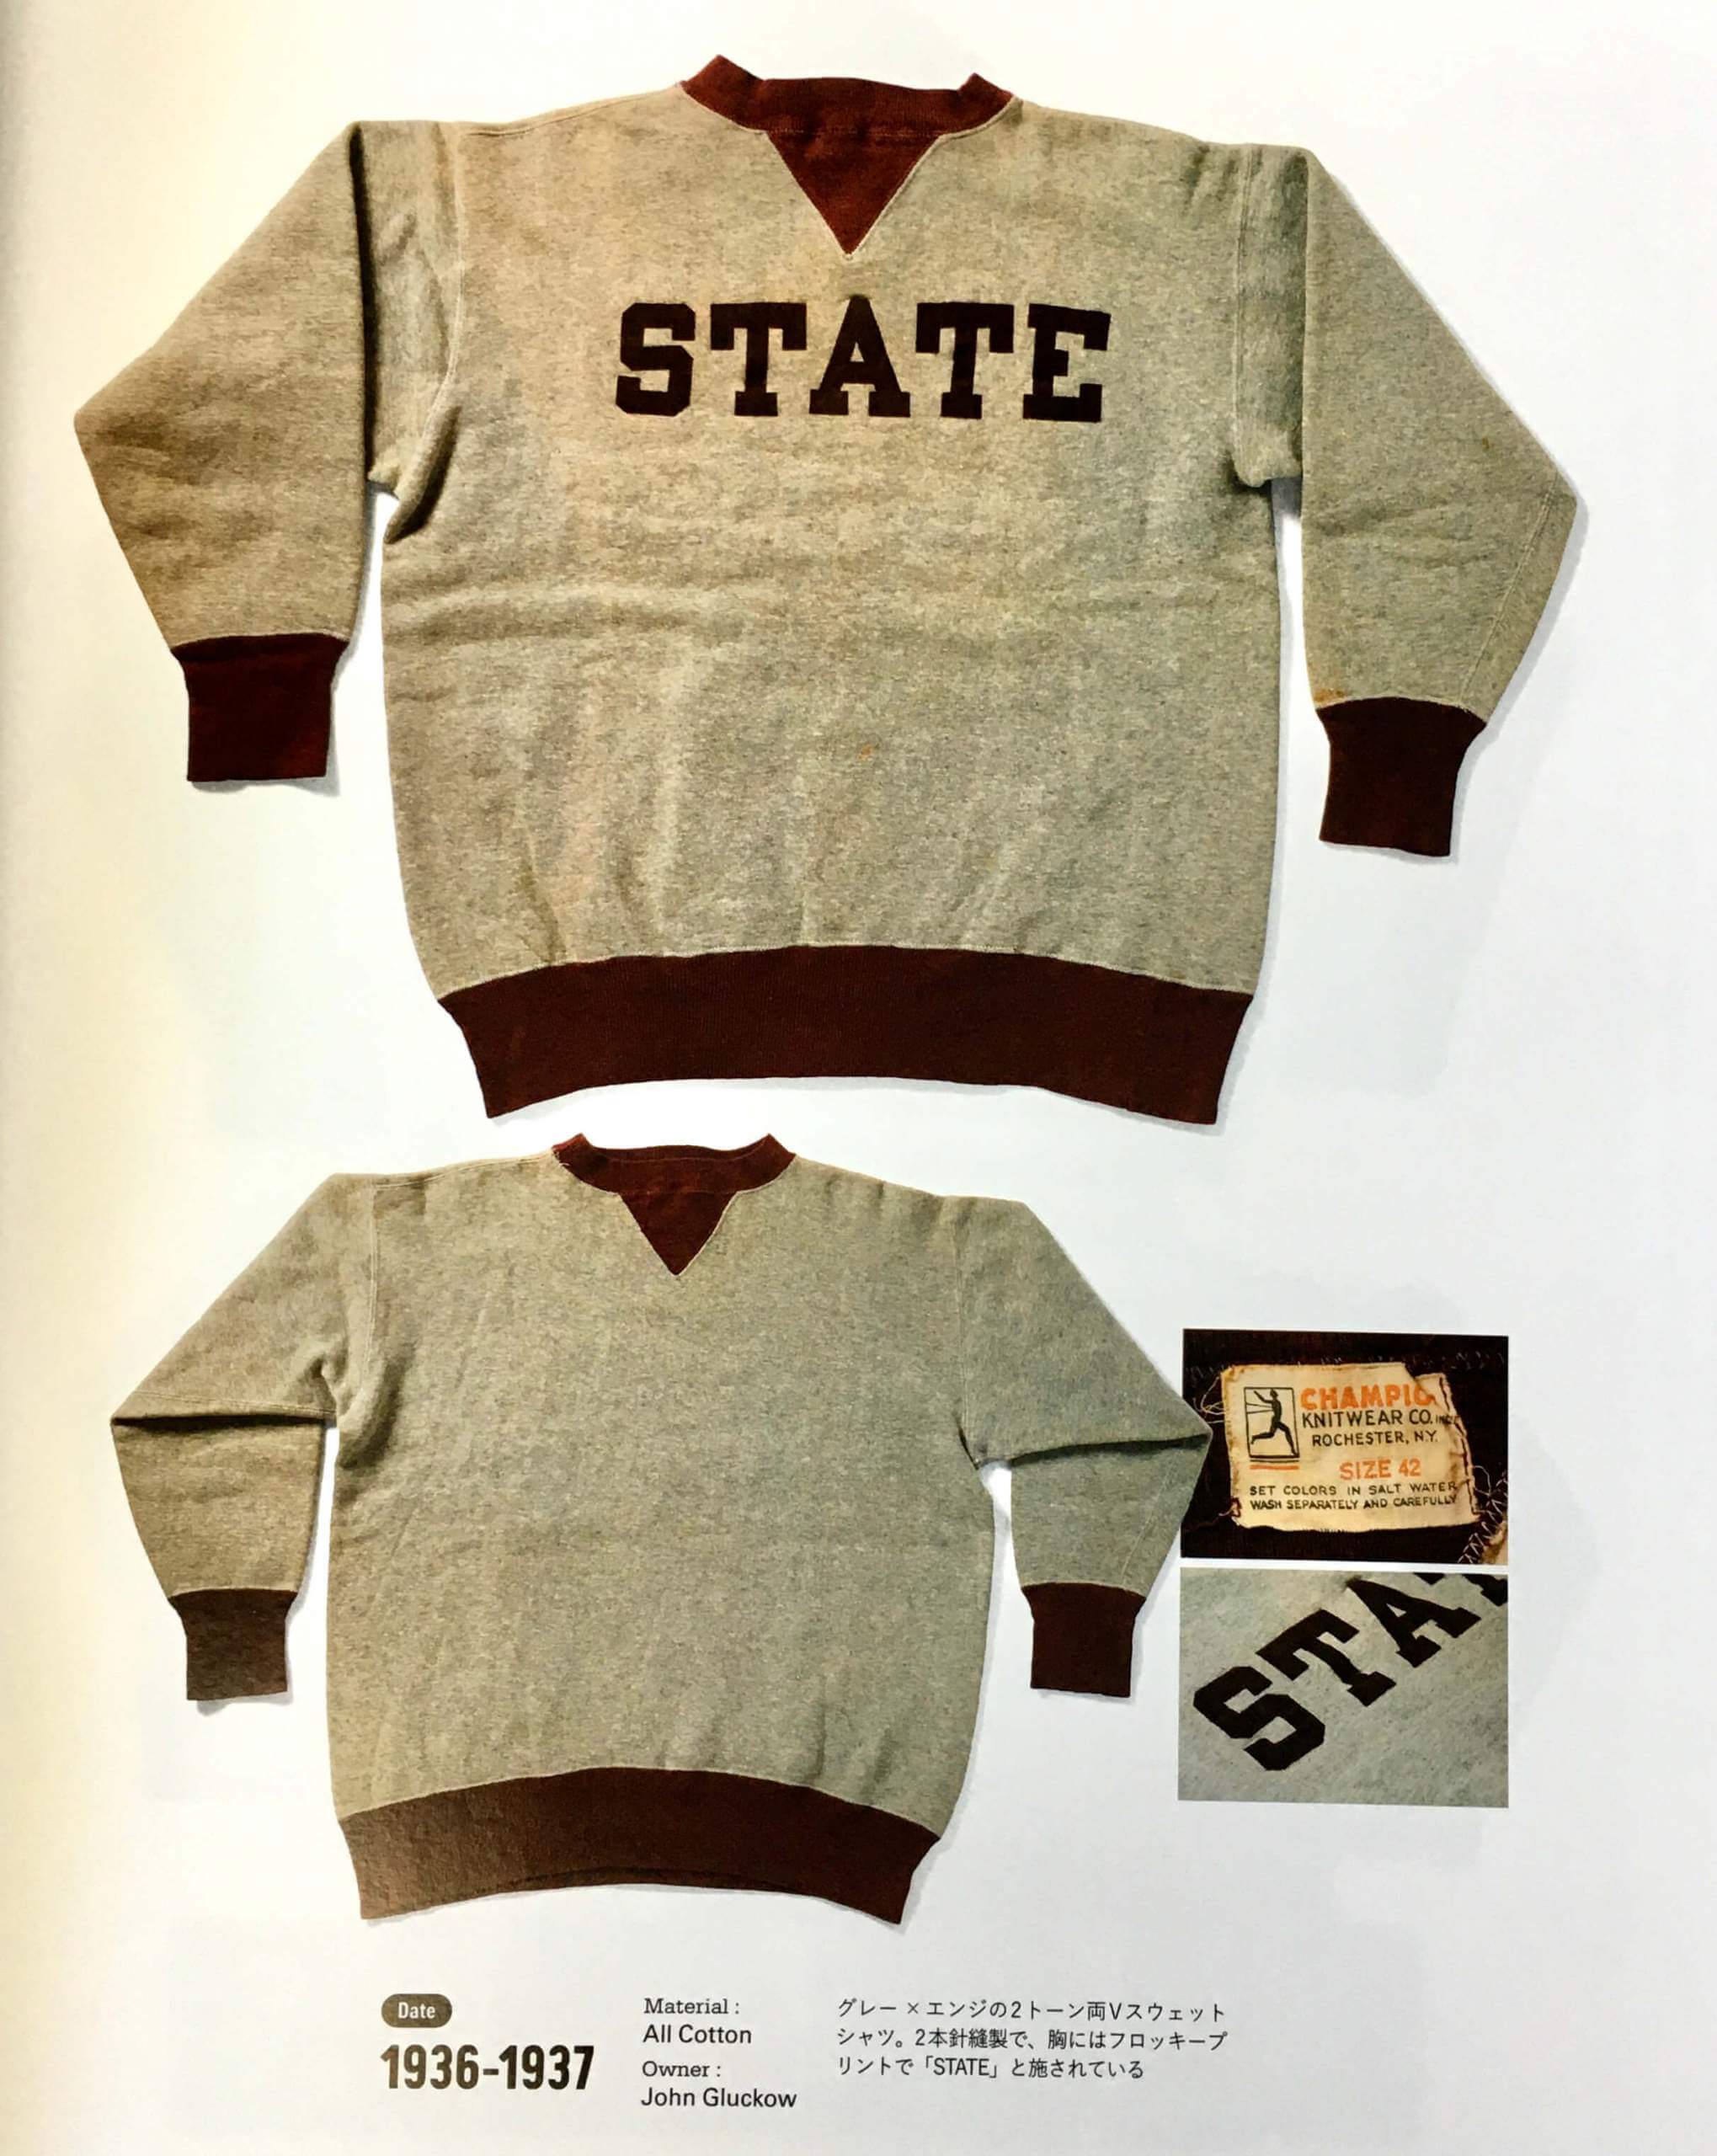 Riveters Unveil New Sweater Design for Season 5 - PREMIER HOCKEY